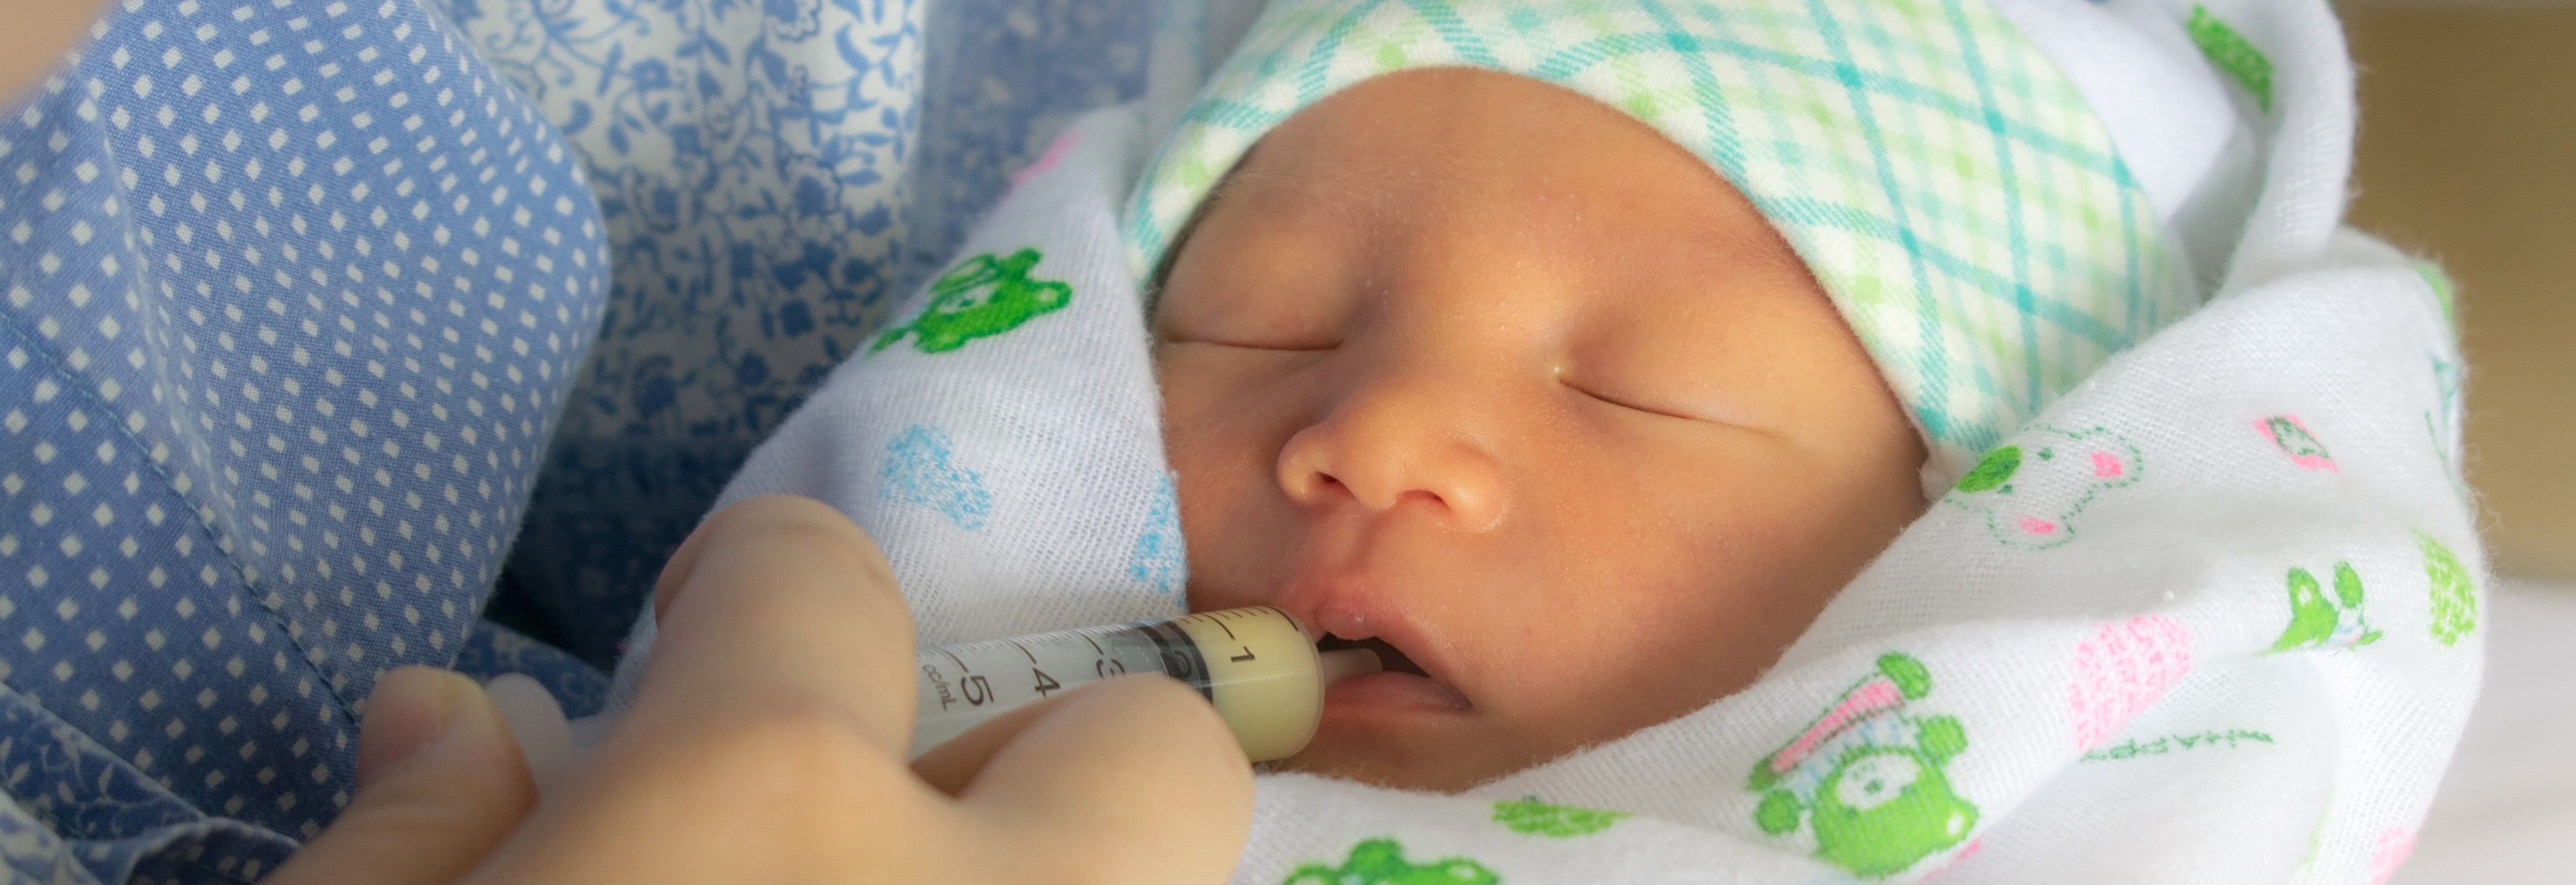 Perlukah Berikan Obat Pada Bayi Baru Lahir yang Terserang Pilek?